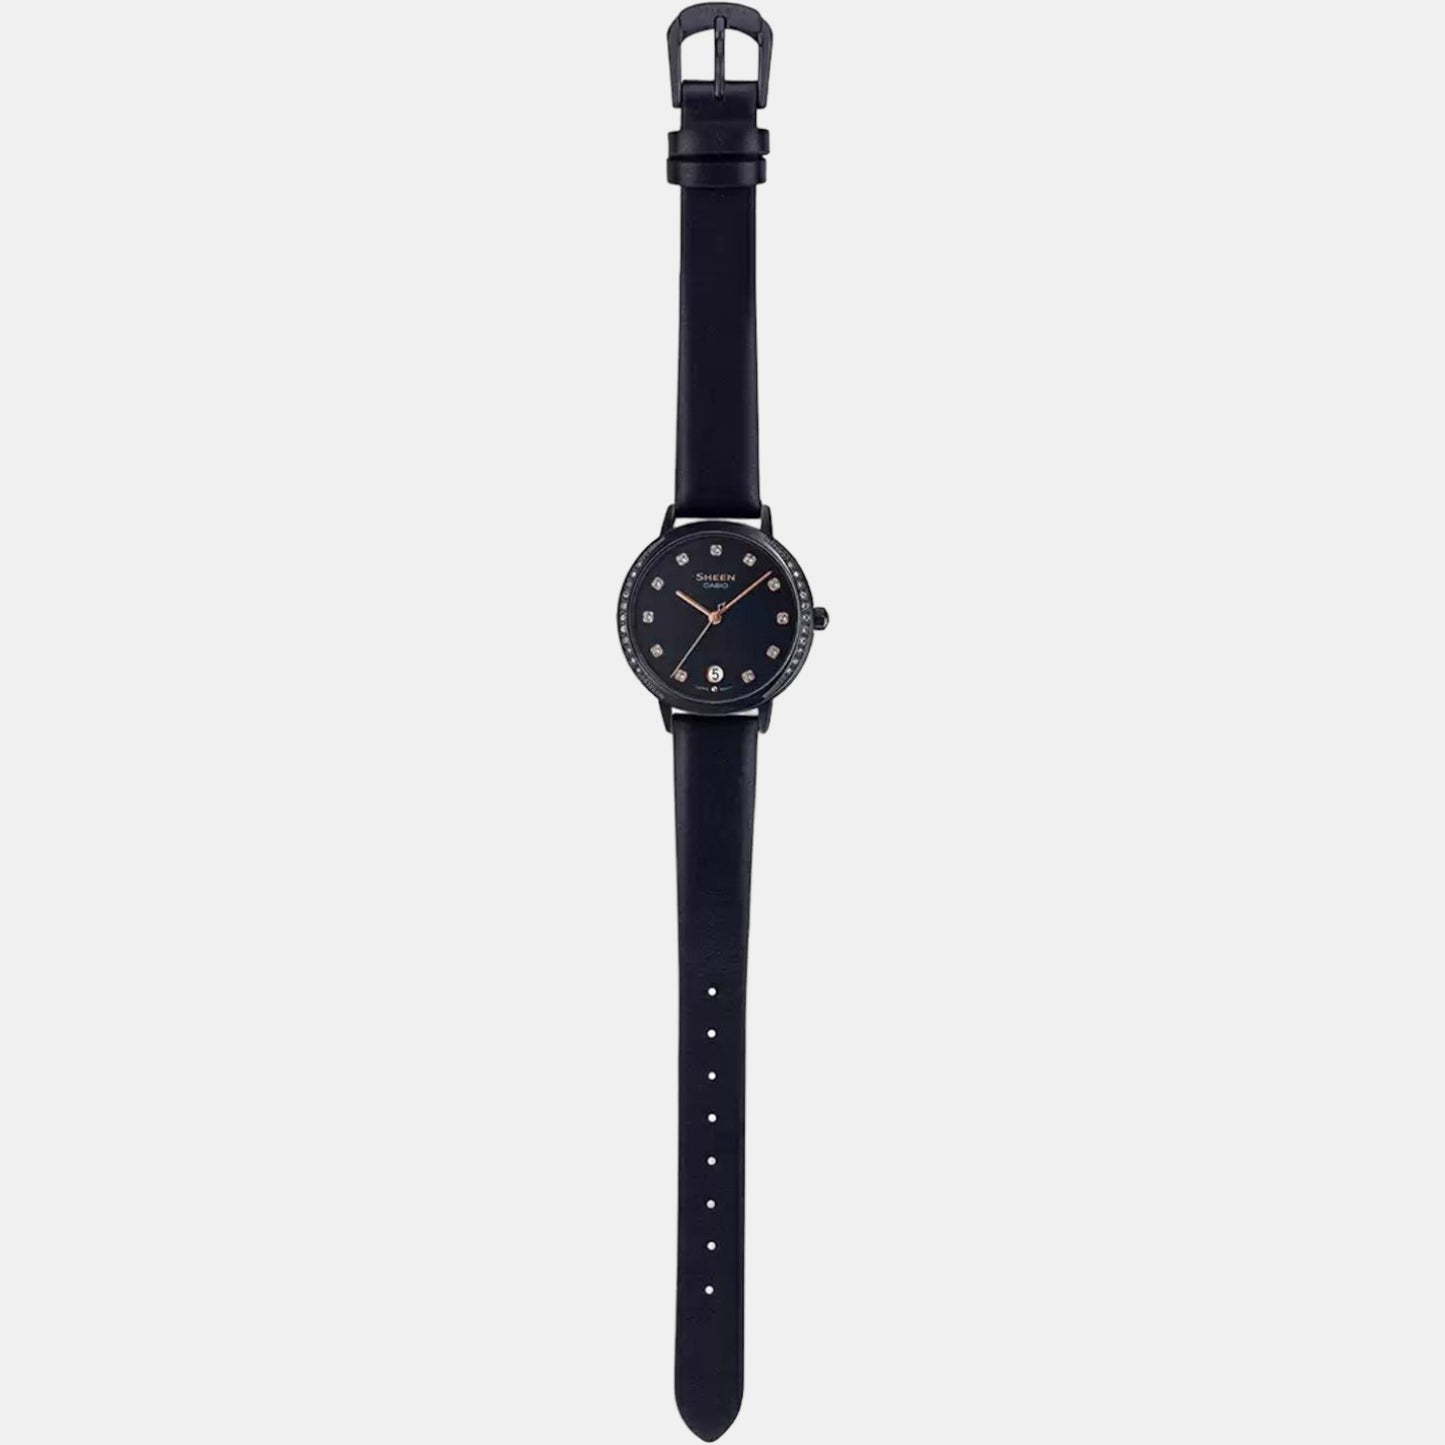 casio-stainless-steel-black-analog-womens-watch-watch-sh236